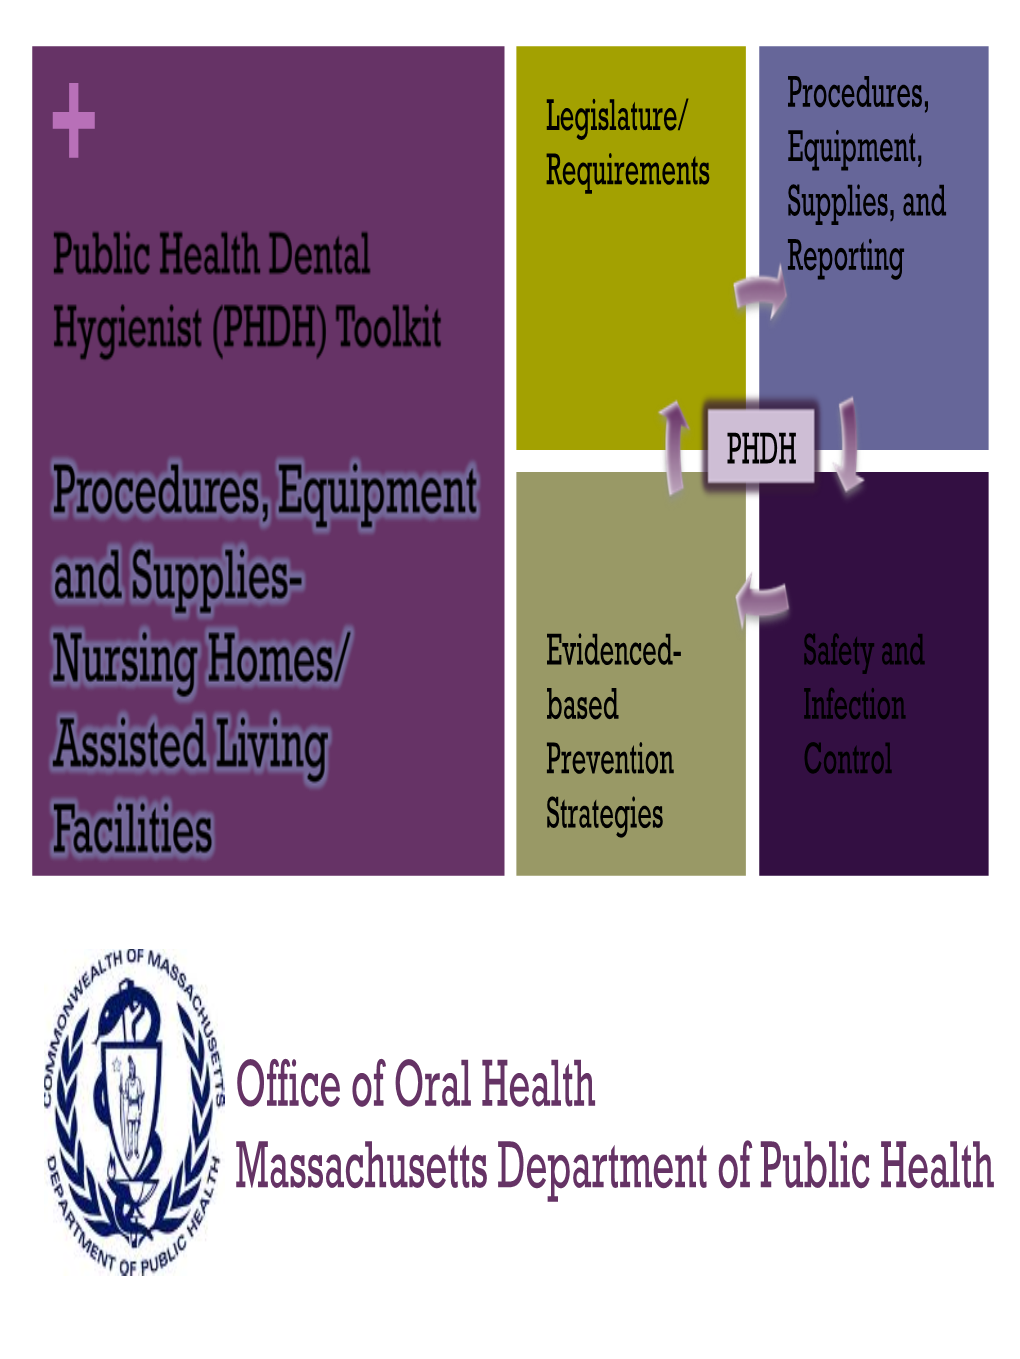 Nursing Homes/Assisted Living Facilities